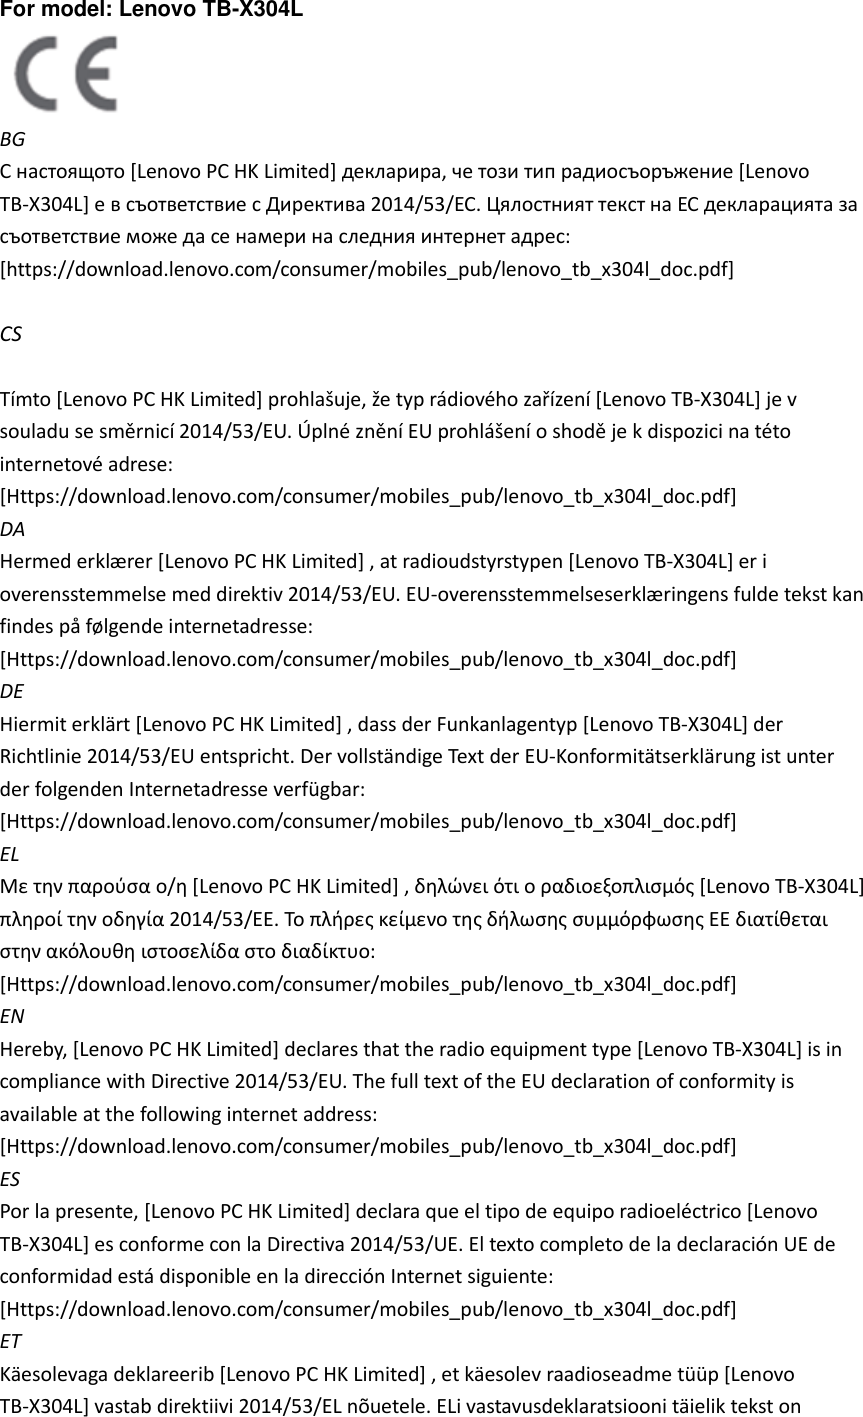 For model: Lenovo TB-X304L    BG С настоящото [Lenovo PC HK Limited] декларира, че този тип радиосъоръжение [Lenovo TB-X304L] е в съответствие с Директива 2014/53/ЕС. Цялостният текст на ЕС декларацията за съответствие може да се намери на следния интернет адрес: [https://download.lenovo.com/consumer/mobiles_pub/lenovo_tb_x304l_doc.pdf]    CS  Tímto [Lenovo PC HK Limited] prohlašuje, že typ rádiového zařízení [Lenovo TB-X304L] je v souladu se směrnicí 2014/53/EU. Úplné znění EU prohlášení o shodě je k dispozici na této internetové adrese: [Https://download.lenovo.com/consumer/mobiles_pub/lenovo_tb_x304l_doc.pdf]   DA Hermed erklæ rer [Lenovo PC HK Limited] , at radioudstyrstypen [Lenovo TB-X304L] er i overensstemmelse med direktiv 2014/53/EU. EU-overensstemmelseserklæ ringens fulde tekst kan findes på følgende internetadresse: [Https://download.lenovo.com/consumer/mobiles_pub/lenovo_tb_x304l_doc.pdf]   DE Hiermit erklärt [Lenovo PC HK Limited] , dass der Funkanlagentyp [Lenovo TB-X304L] der Richtlinie 2014/53/EU entspricht. Der vollständige Text der EU-Konformitätserklärung ist unter der folgenden Internetadresse verfügbar: [Https://download.lenovo.com/consumer/mobiles_pub/lenovo_tb_x304l_doc.pdf]   EL Με την παρούσα ο/η [Lenovo PC HK Limited] , δηλώνει ότι ο ραδιοεξοπλισμός [Lenovo TB-X304L] πληροί την οδηγία 2014/53/ΕΕ. Το πλήρες κείμενο της δήλωσης συμμόρφωσης ΕΕ διατίθεται στην ακόλουθη ιστοσελίδα στο διαδίκτυο: [Https://download.lenovo.com/consumer/mobiles_pub/lenovo_tb_x304l_doc.pdf]   EN Hereby, [Lenovo PC HK Limited] declares that the radio equipment type [Lenovo TB-X304L] is in compliance with Directive 2014/53/EU. The full text of the EU declaration of conformity is available at the following internet address: [Https://download.lenovo.com/consumer/mobiles_pub/lenovo_tb_x304l_doc.pdf]   ES Por la presente, [Lenovo PC HK Limited] declara que el tipo de equipo radioeléctrico [Lenovo TB-X304L] es conforme con la Directiva 2014/53/UE. El texto completo de la declaración UE de conformidad está disponible en la dirección Internet siguiente: [Https://download.lenovo.com/consumer/mobiles_pub/lenovo_tb_x304l_doc.pdf]   ET Käesolevaga deklareerib [Lenovo PC HK Limited] , et käesolev raadioseadme tüüp [Lenovo TB-X304L] vastab direktiivi 2014/53/EL nõuetele. ELi vastavusdeklaratsiooni täielik tekst on 